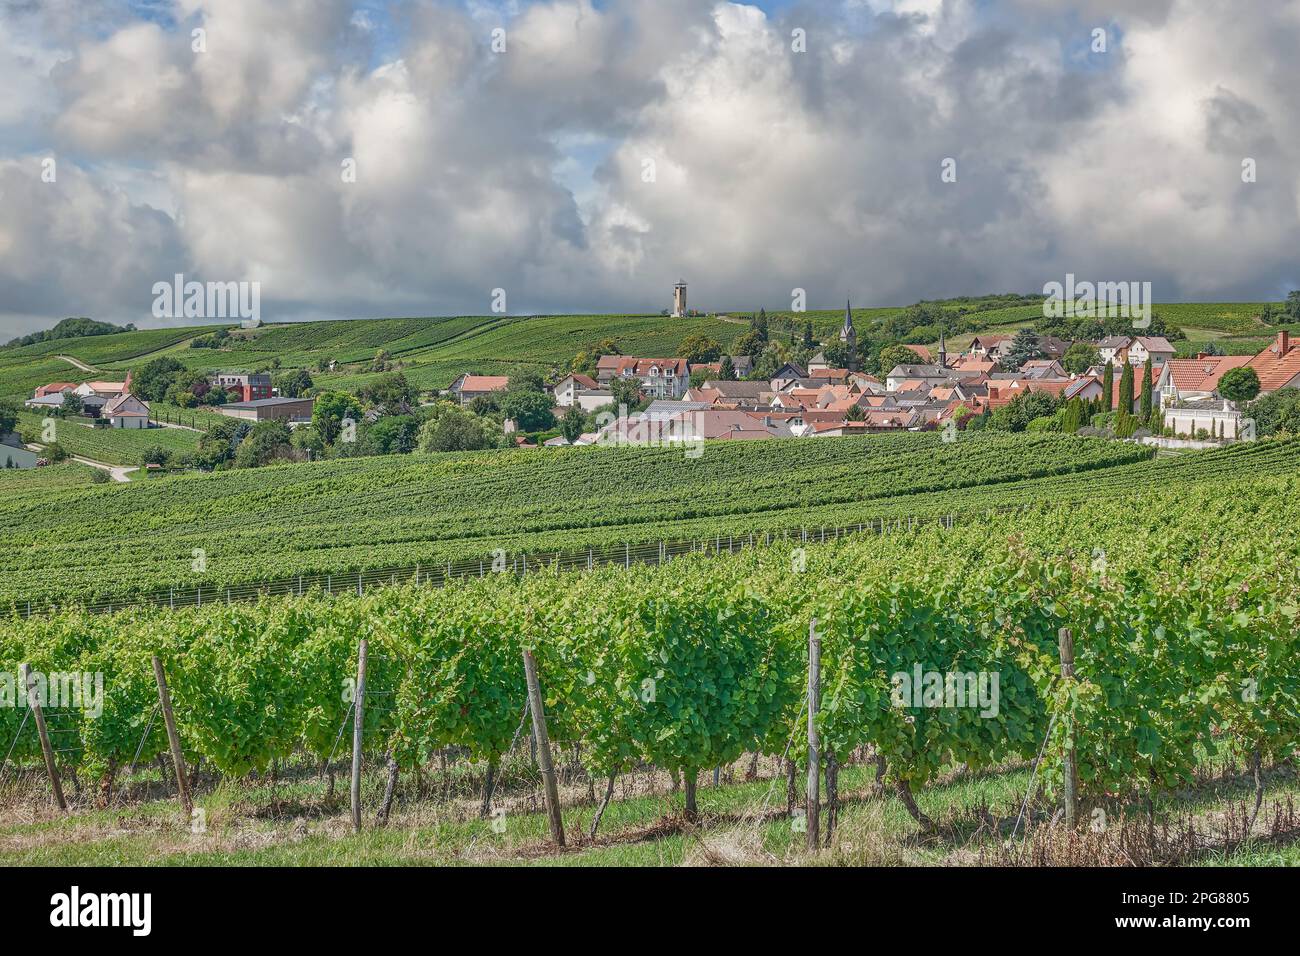 Wine Village of Vendersheim in Vineyard Landscape,Rhinehessen wine region,Germany Stock Photo